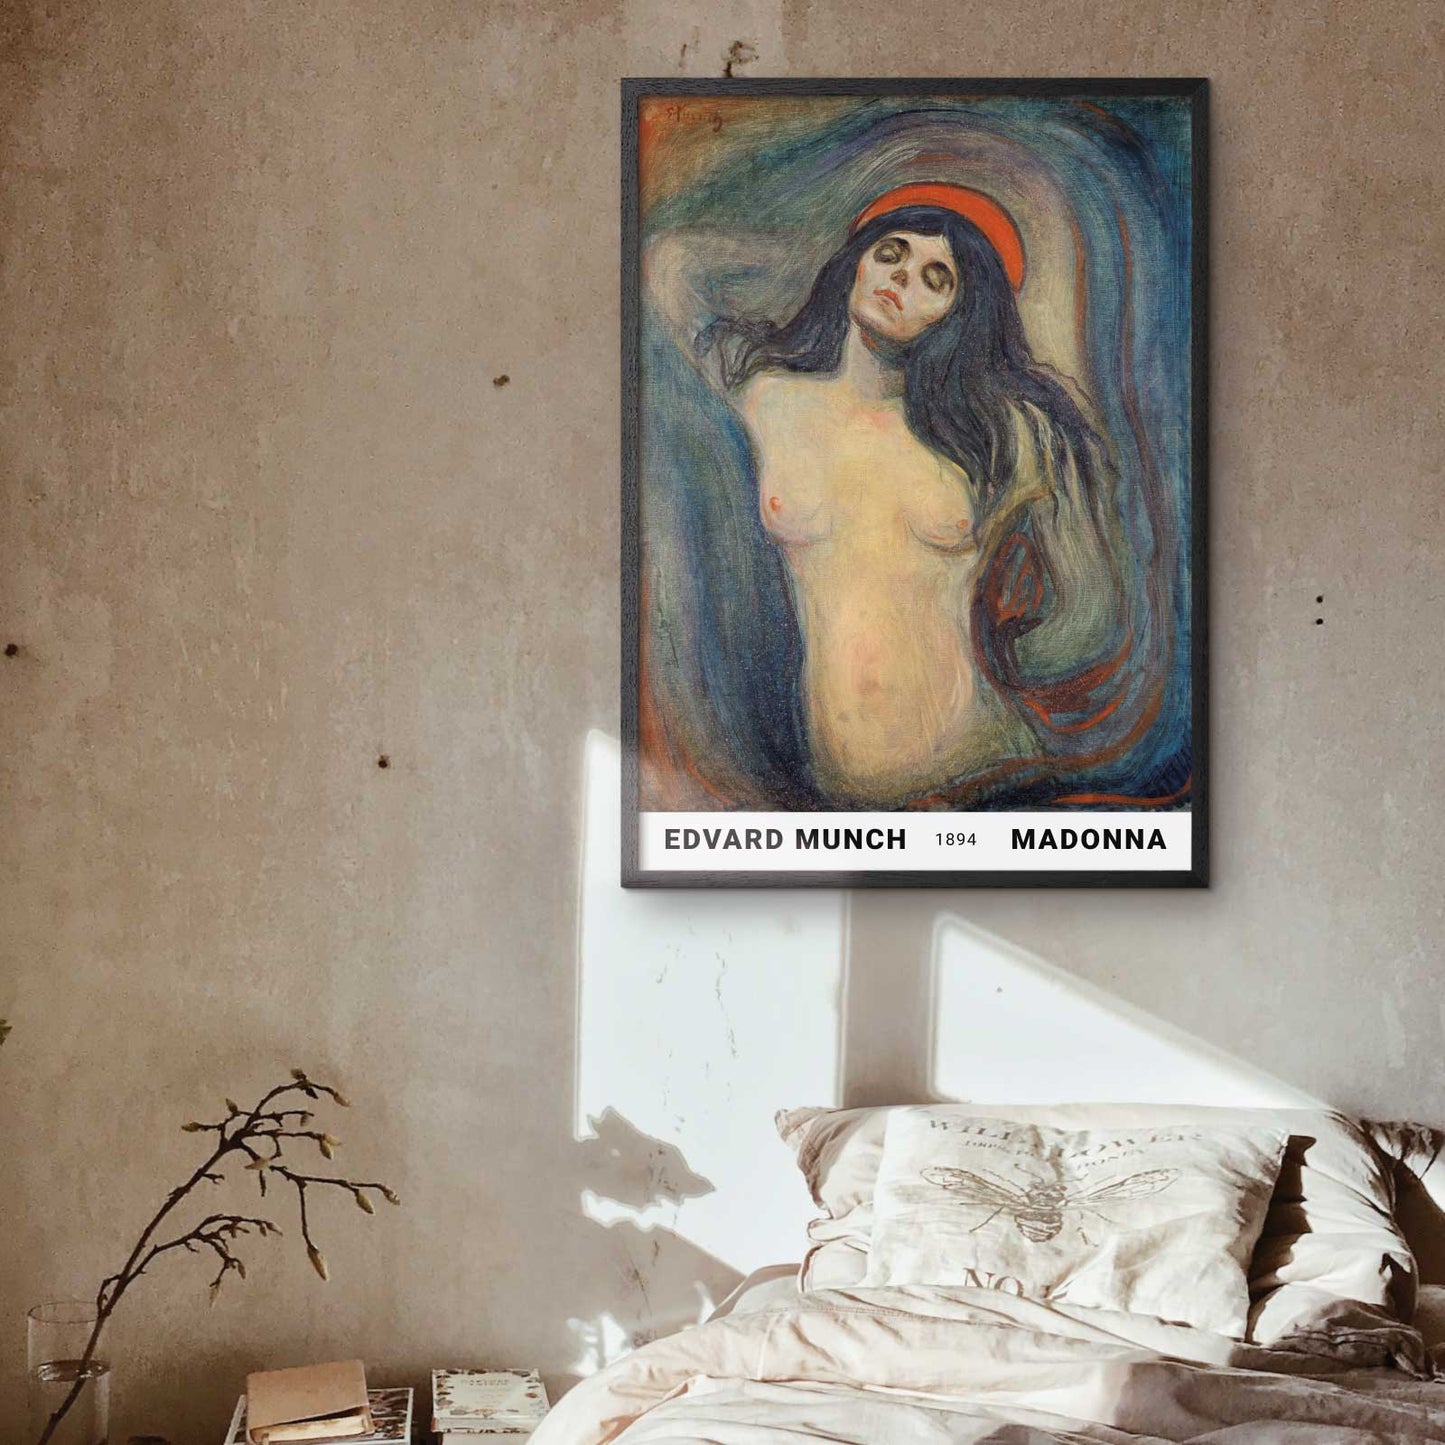 Edvard Munch "Madonna 1894"